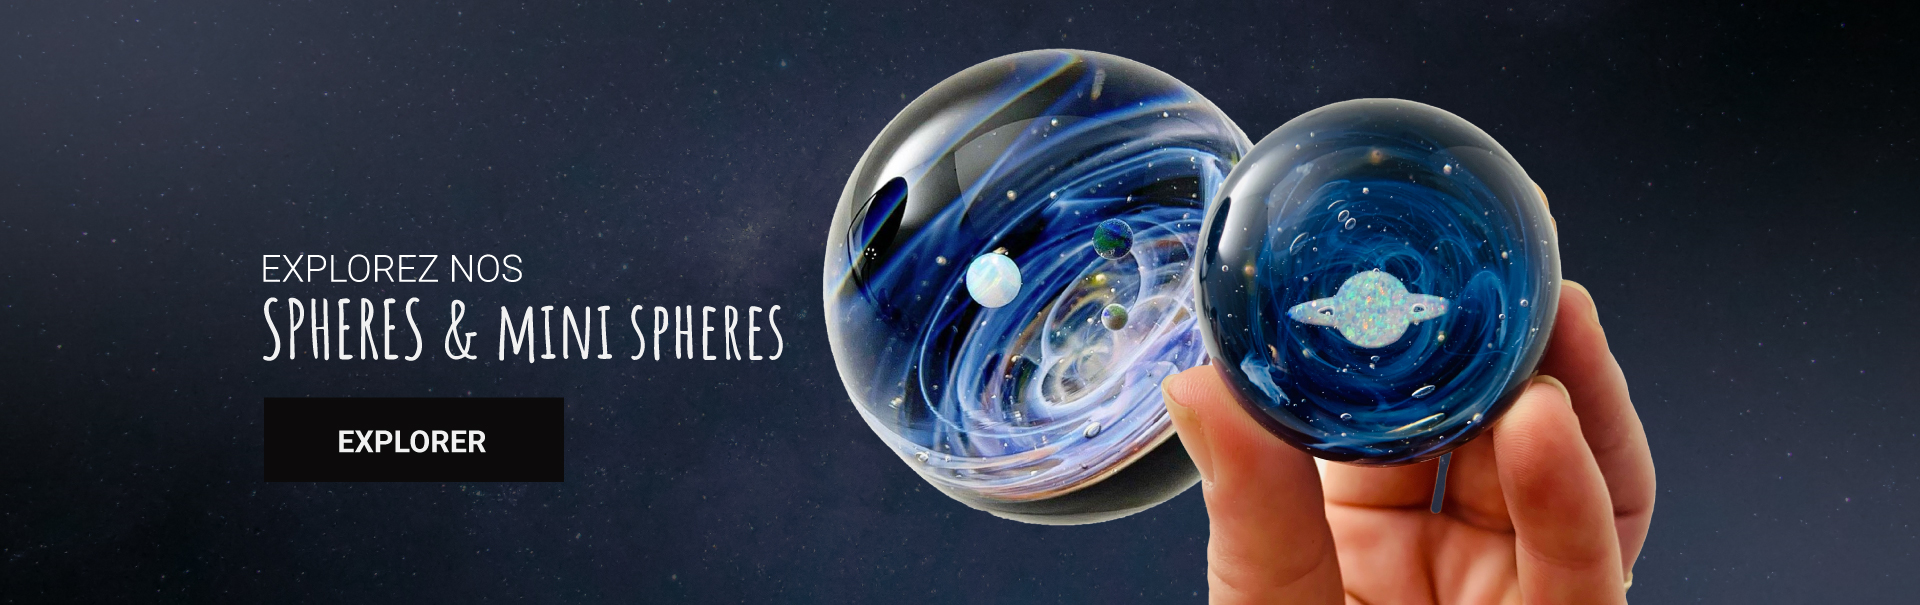 Spheres et mini spheres